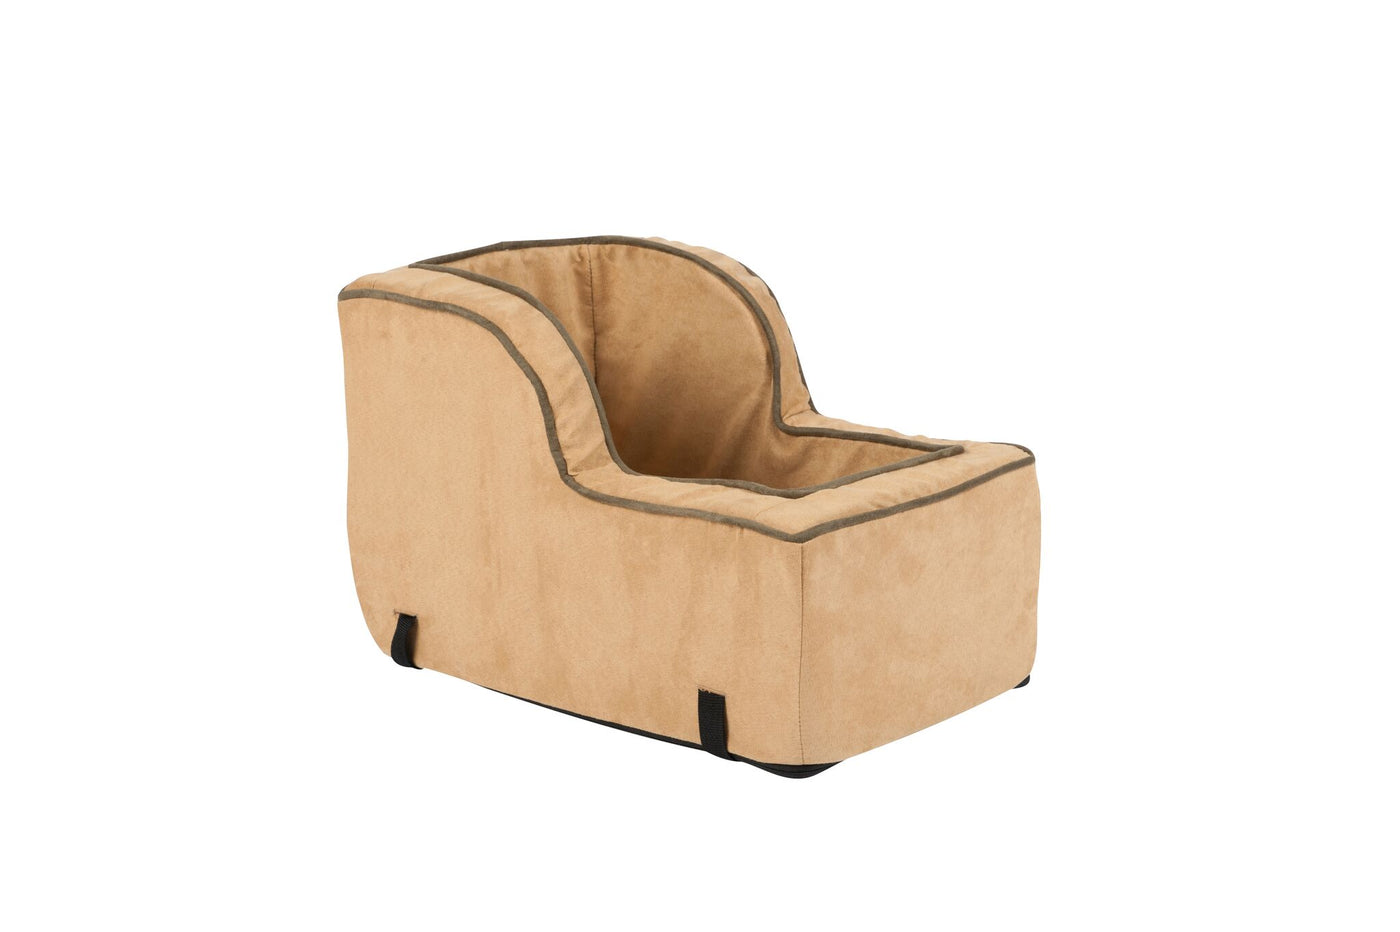 Snoozer Luxury High-Back Console Dog Car Seat